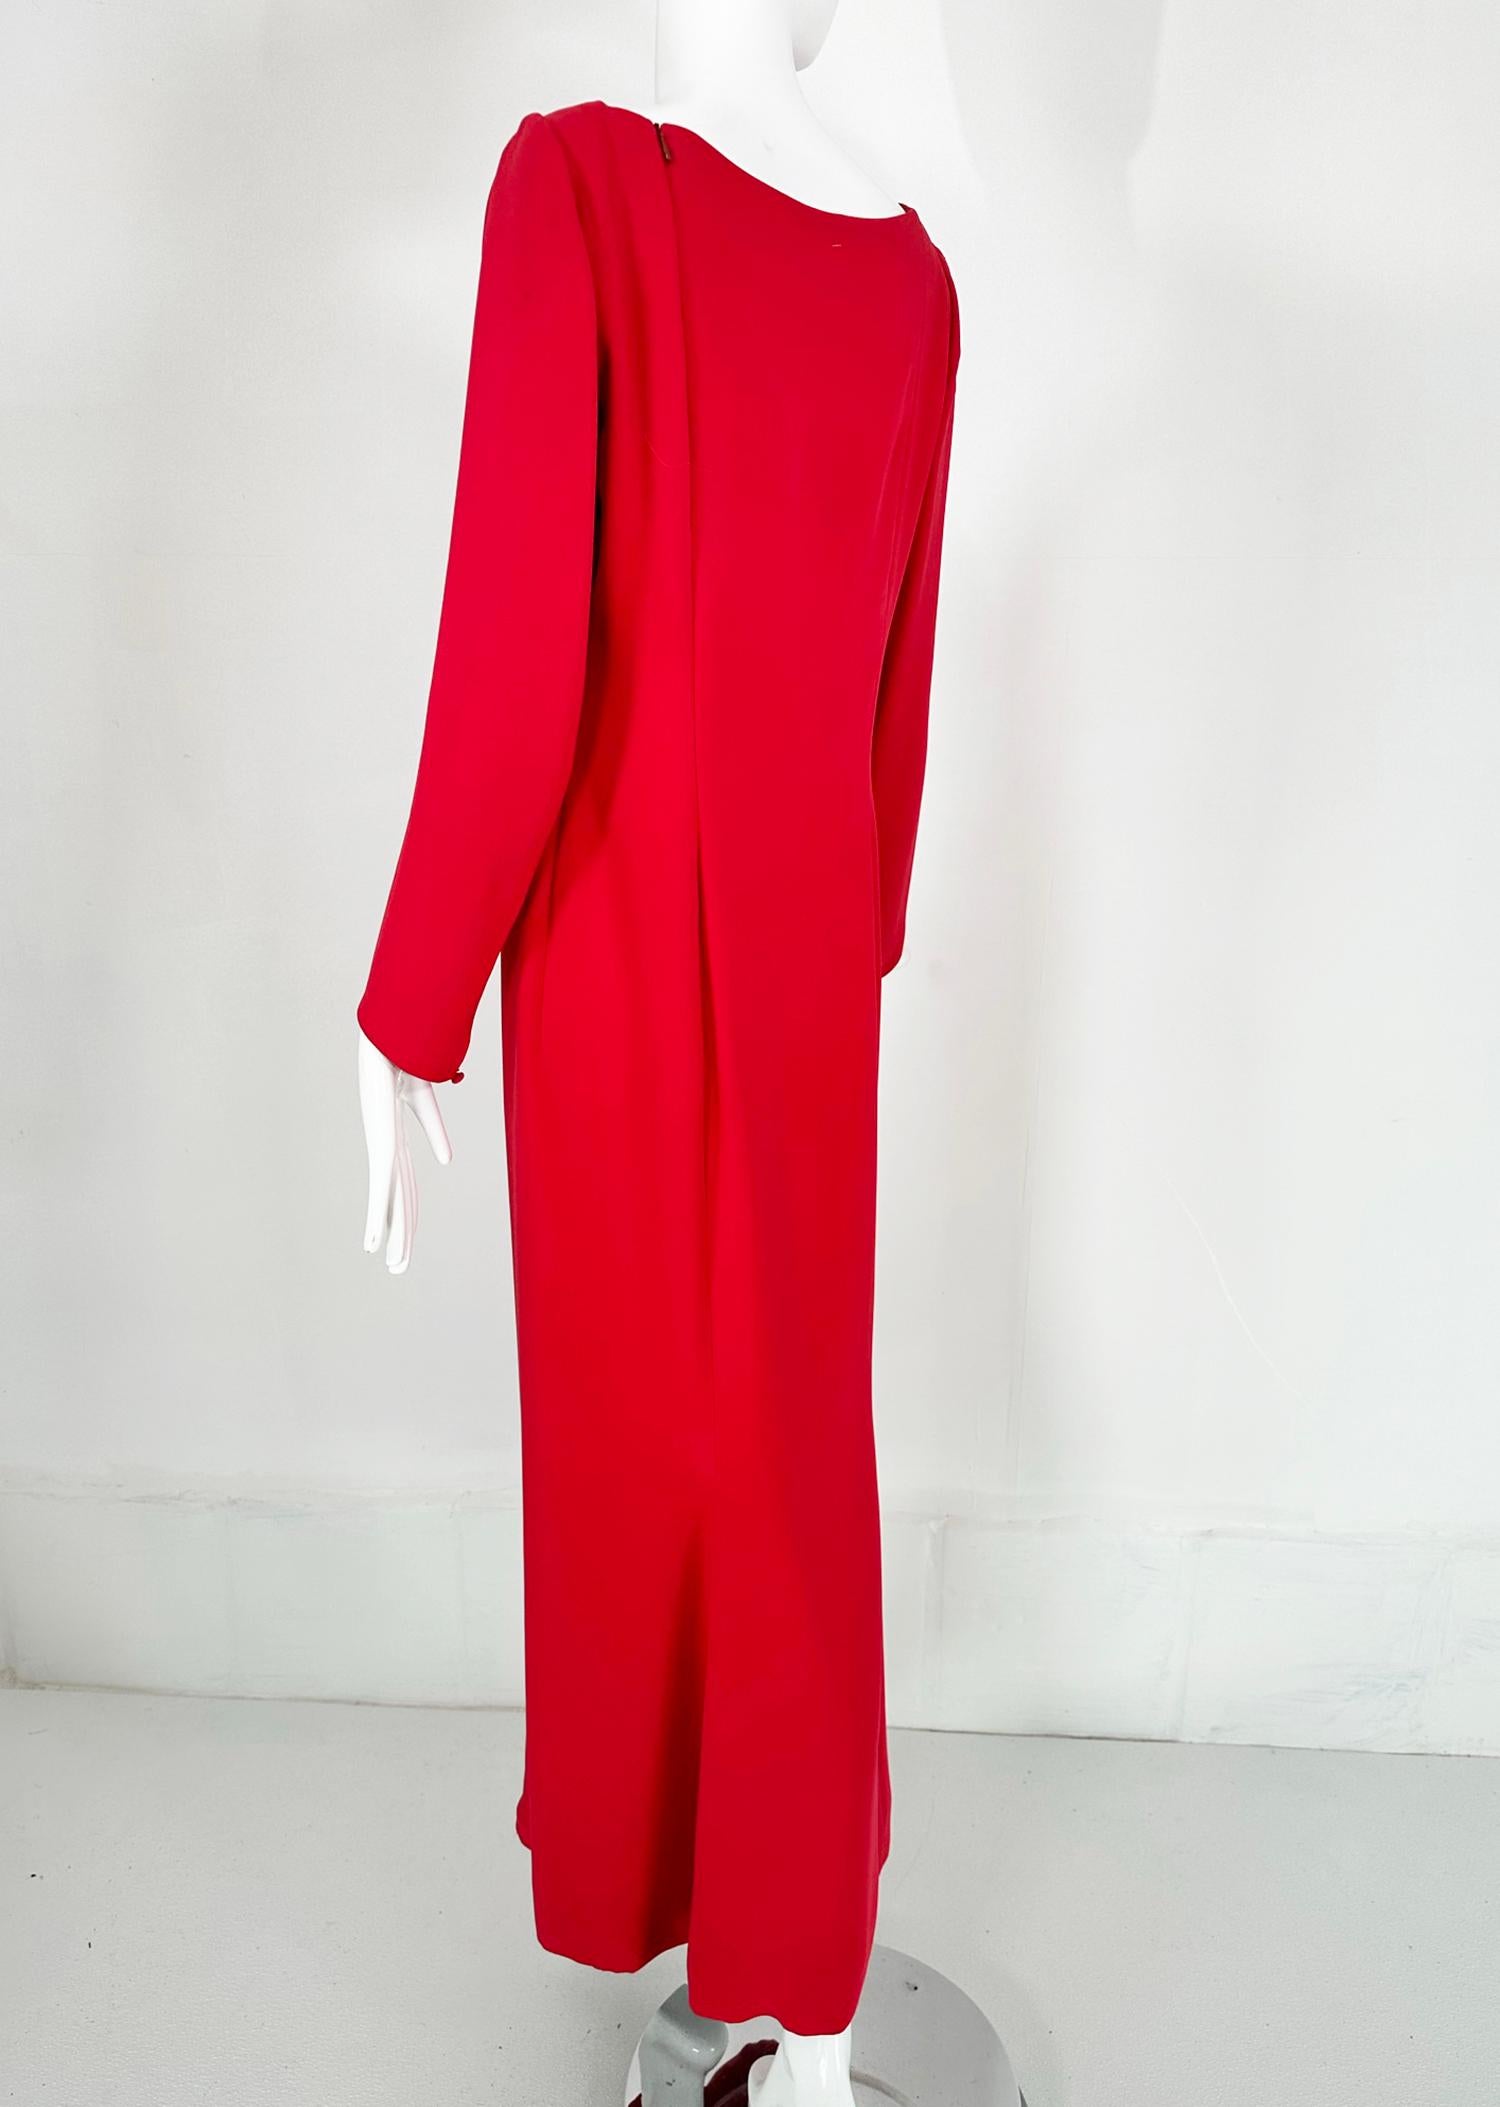 Oscar de la Renta Coral Red Silk Long Sleeve Bateau Neck Column Evening Dress 8 For Sale 2